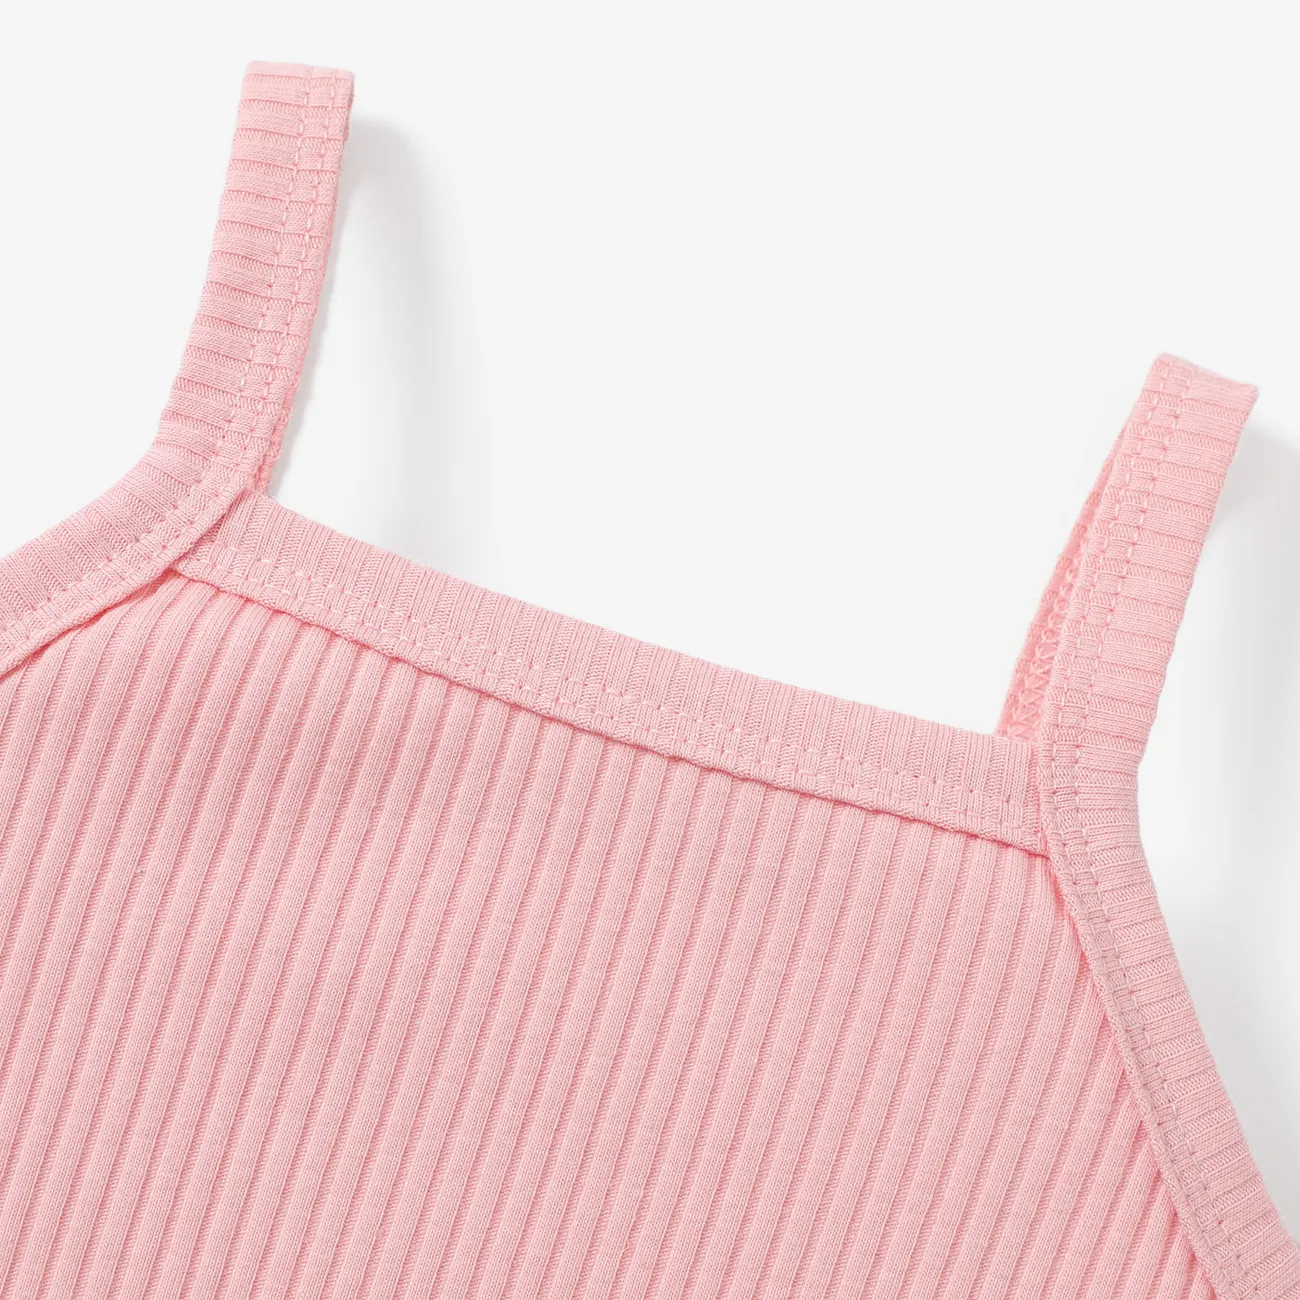 2pcs Baby Girl Plain Ribbed Cotton Camisole and Shorts Set Pink big image 1